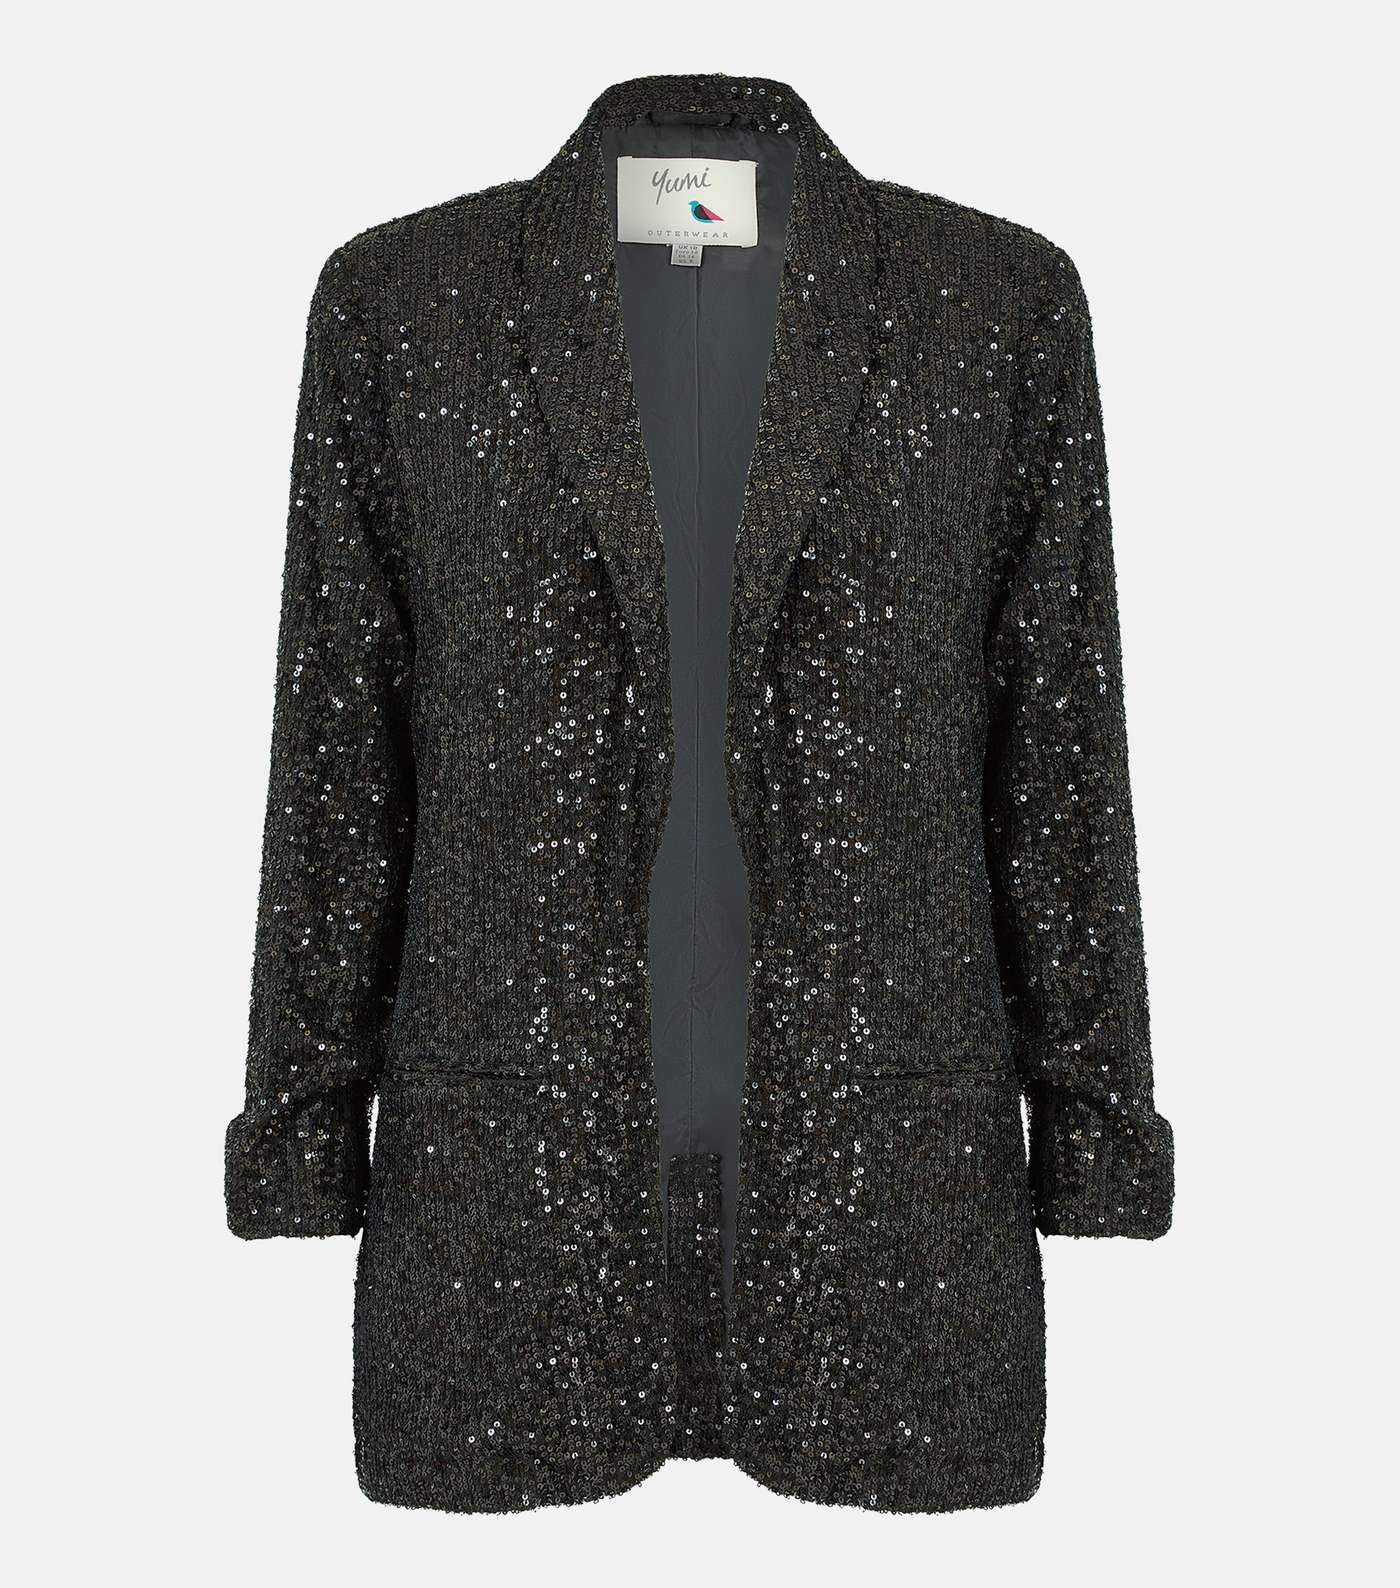 Yumi Black Sequin Blazer Image 5